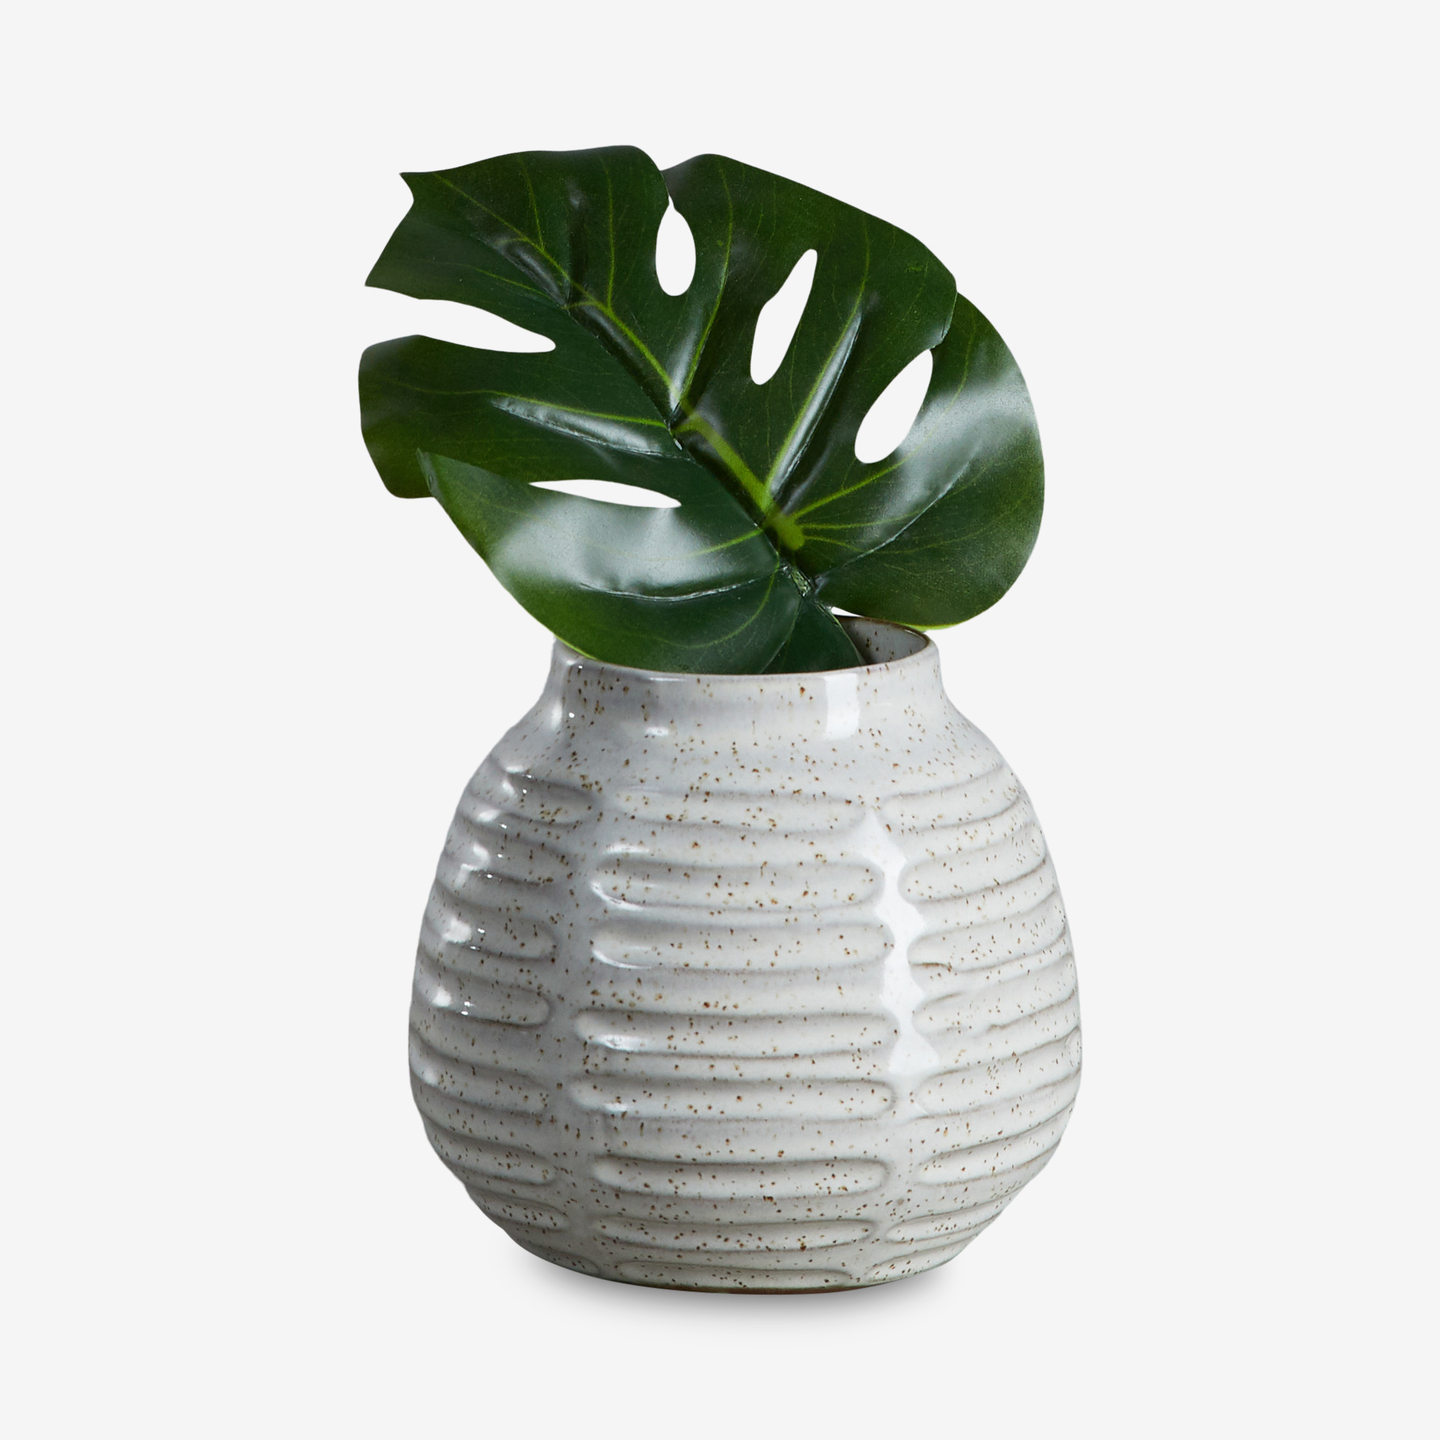 704_Mara-Cream-Vase-Small-_With-Leaf_Industrial_Living-Room-3 2020